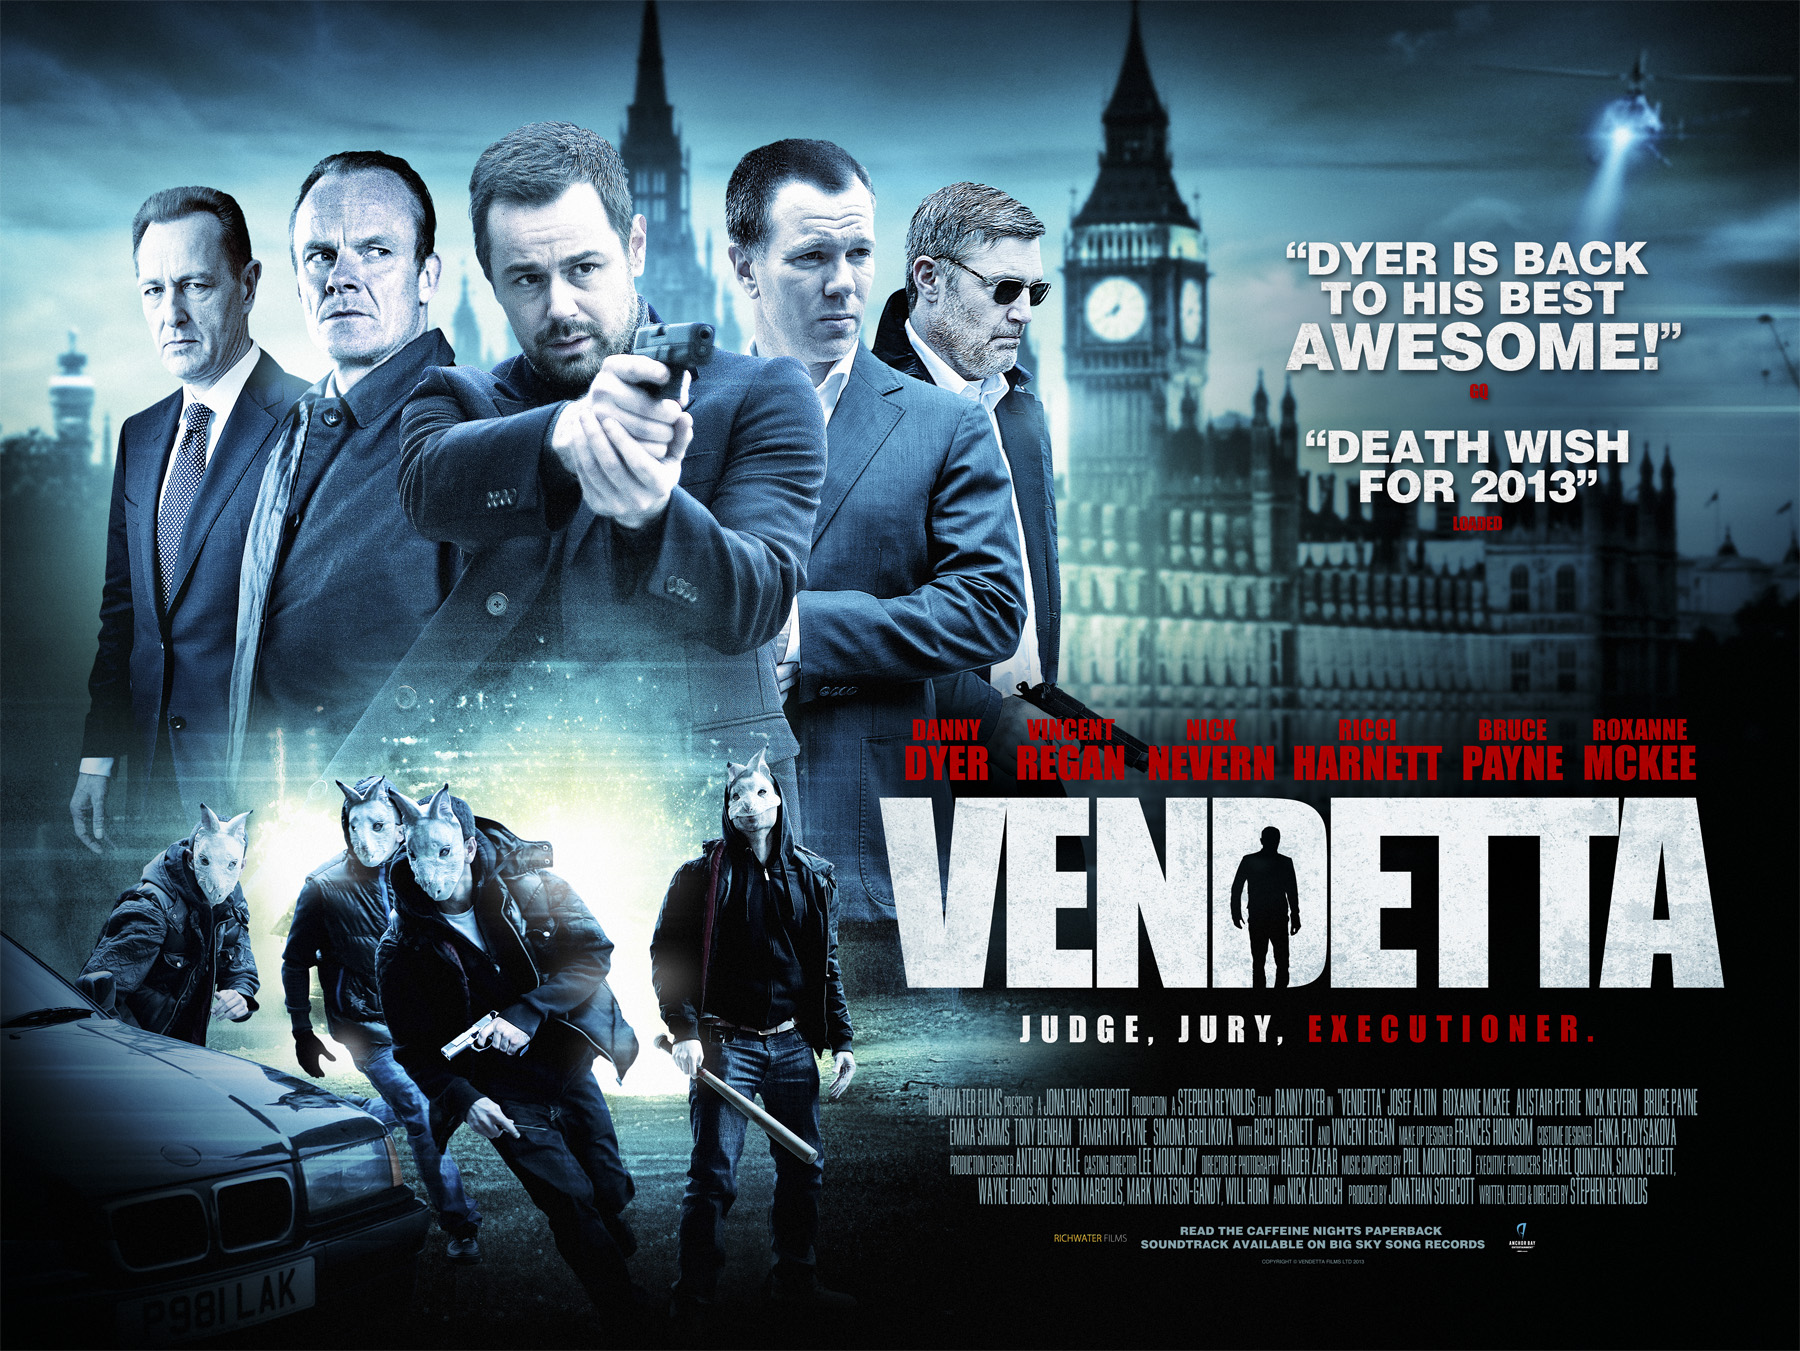 UK Quad poster for 'Vendetta' produced by Jonathan Sothcott